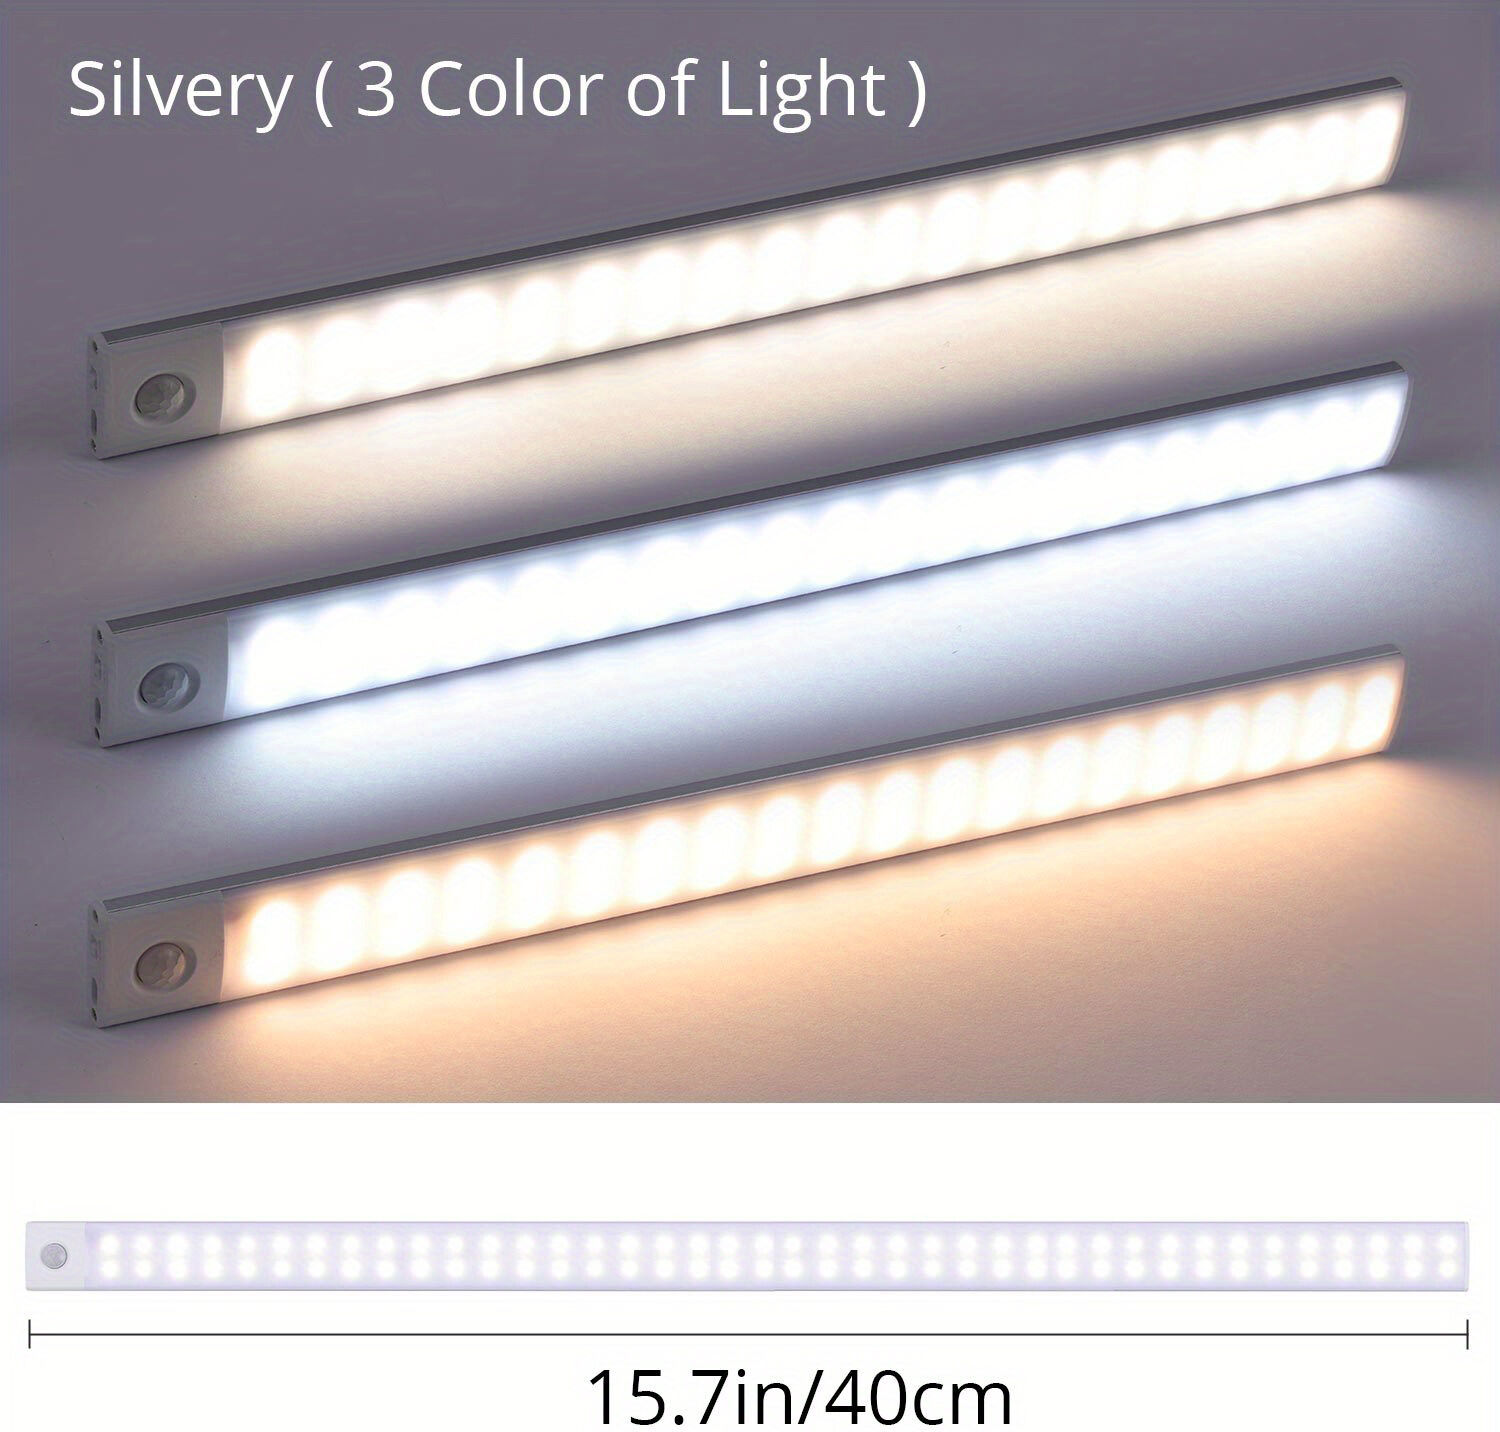 dechome uq02617_40 luce led per armadio attacco magnetico ricaricabile 40 cm colore argento - uq02617